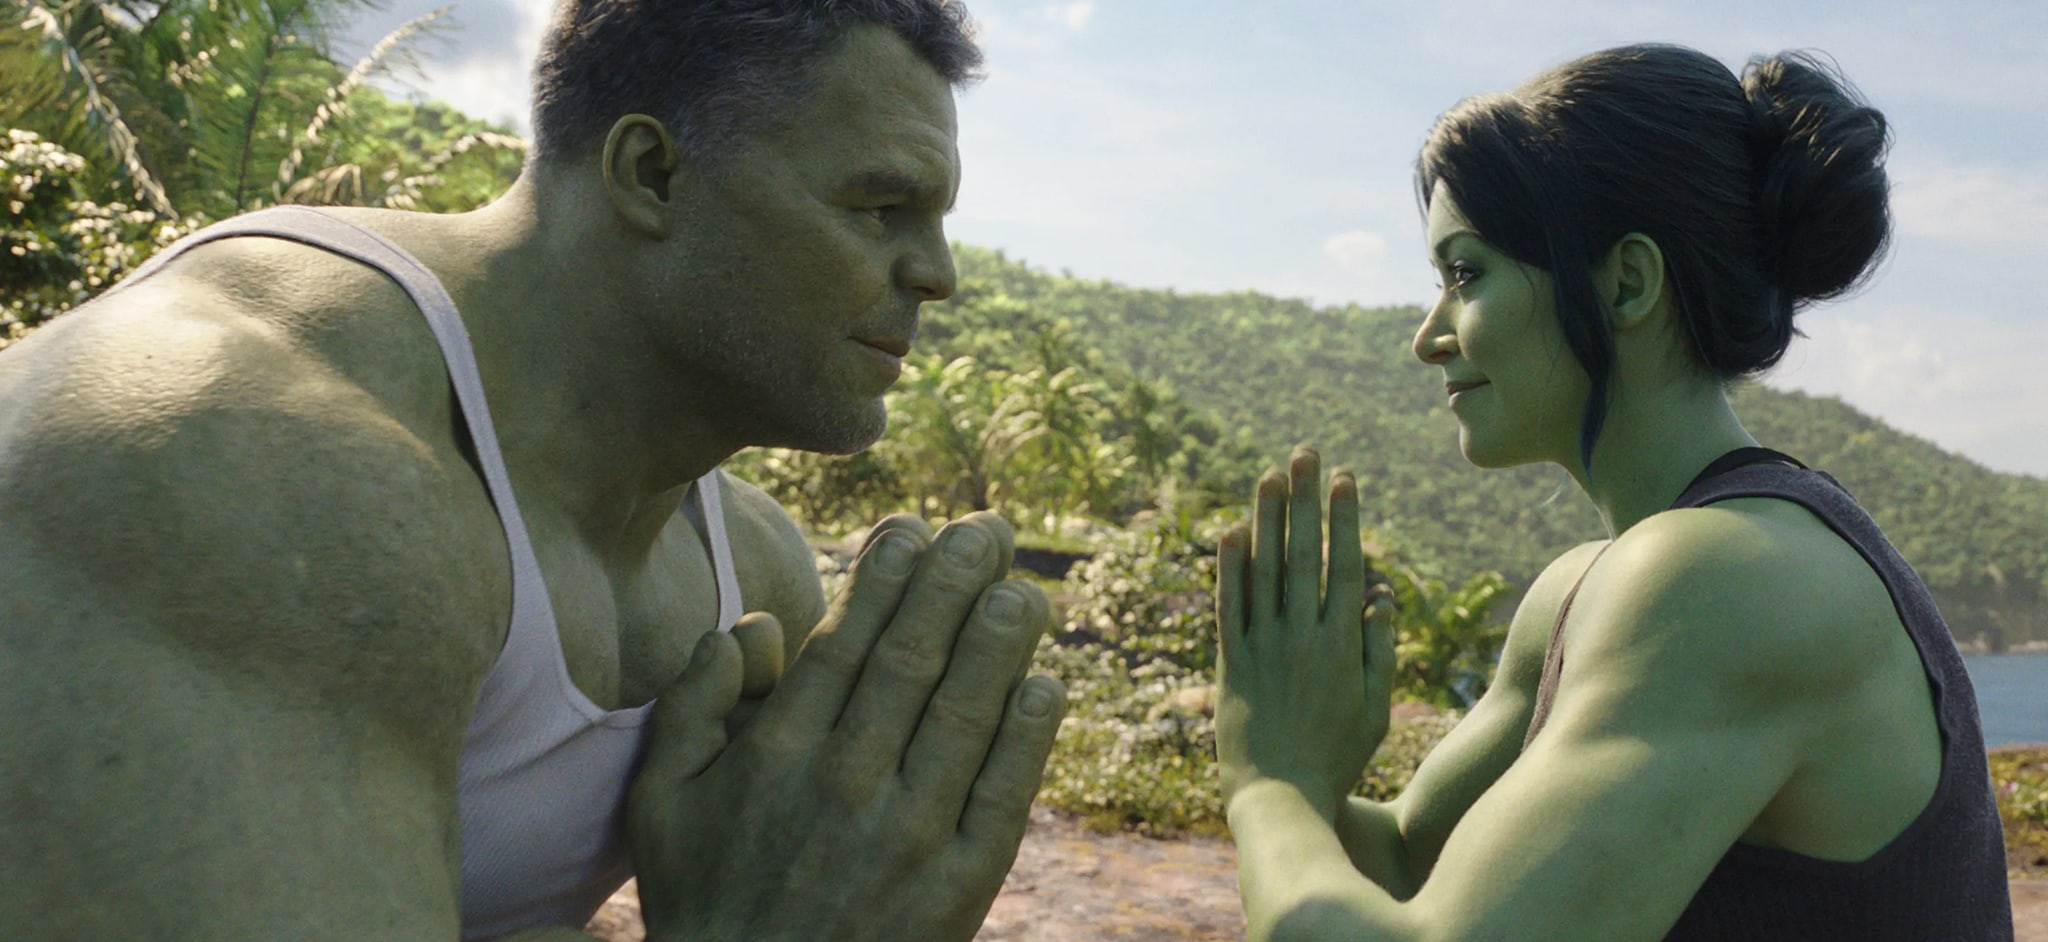 She-Hulk: Attorney at Law stars Tatiana Maslany in the titular role